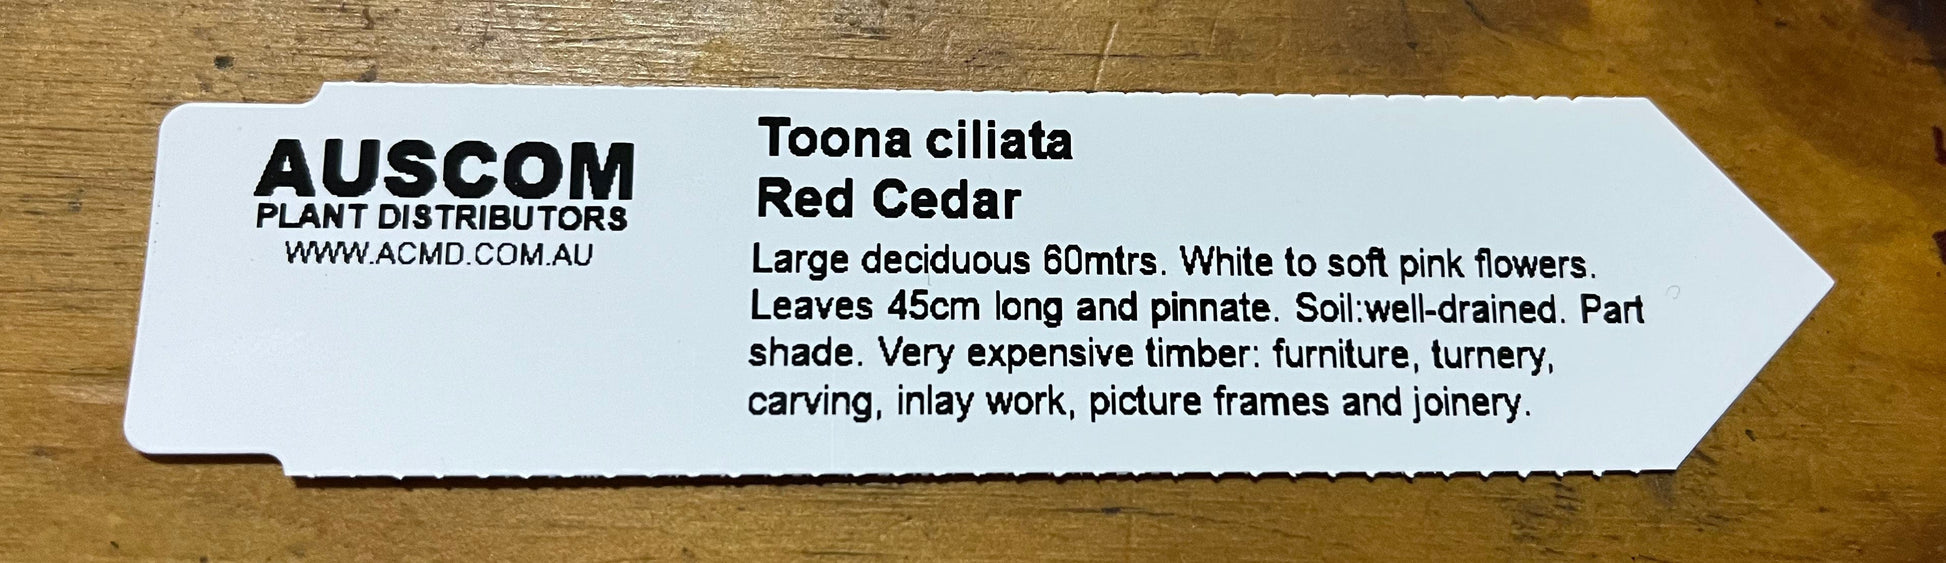 Australian Red Cedar Toona Ciliata - Auscom Plant Distributors